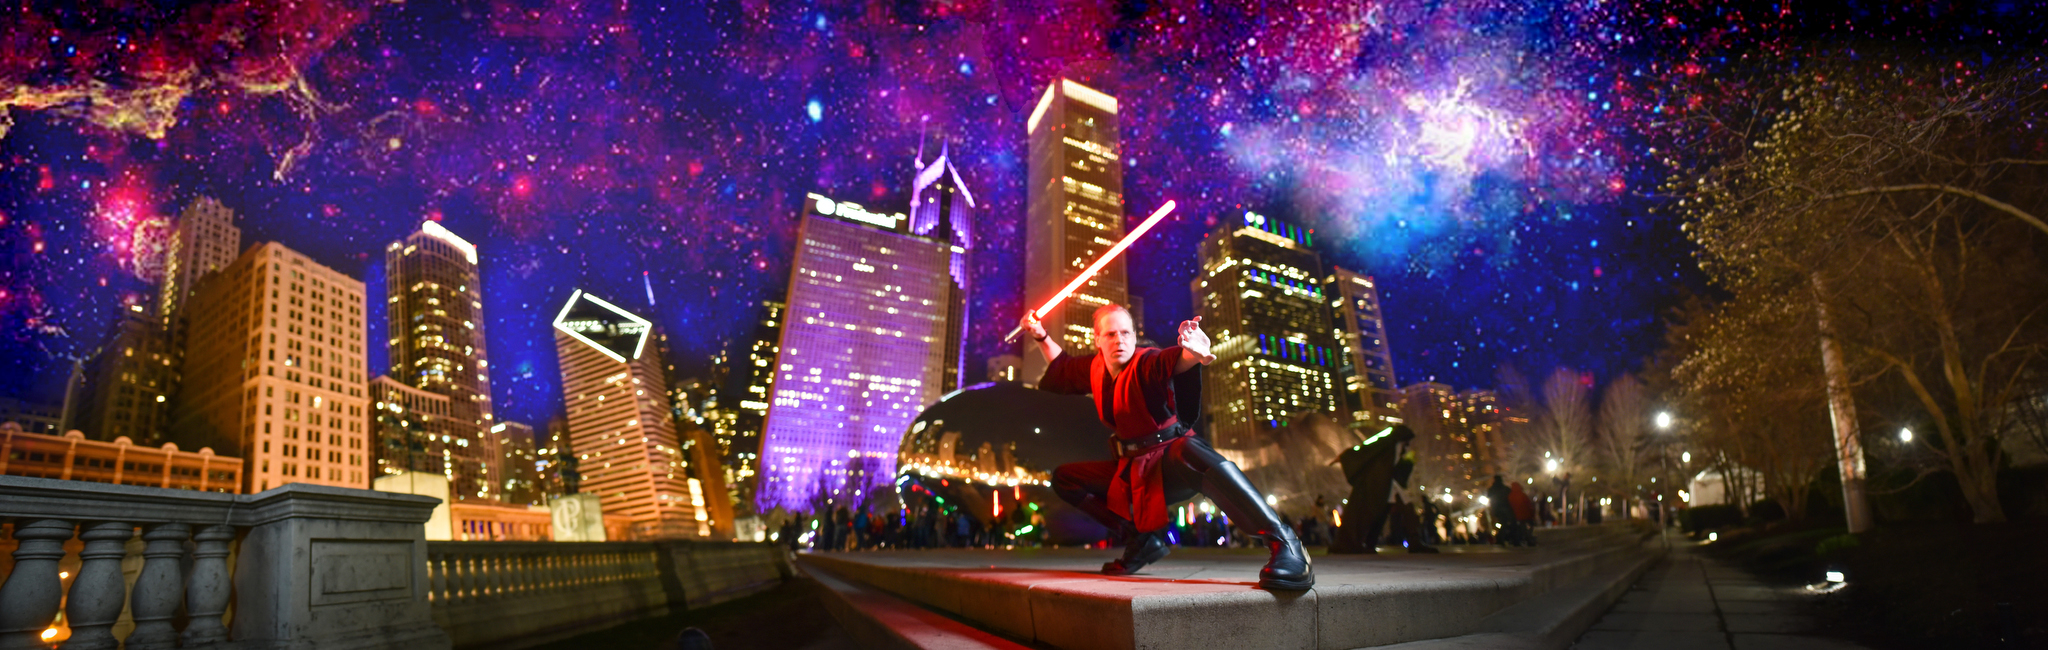 2019.04.14 - Star Wars Celebration Chicago 288840.JPG